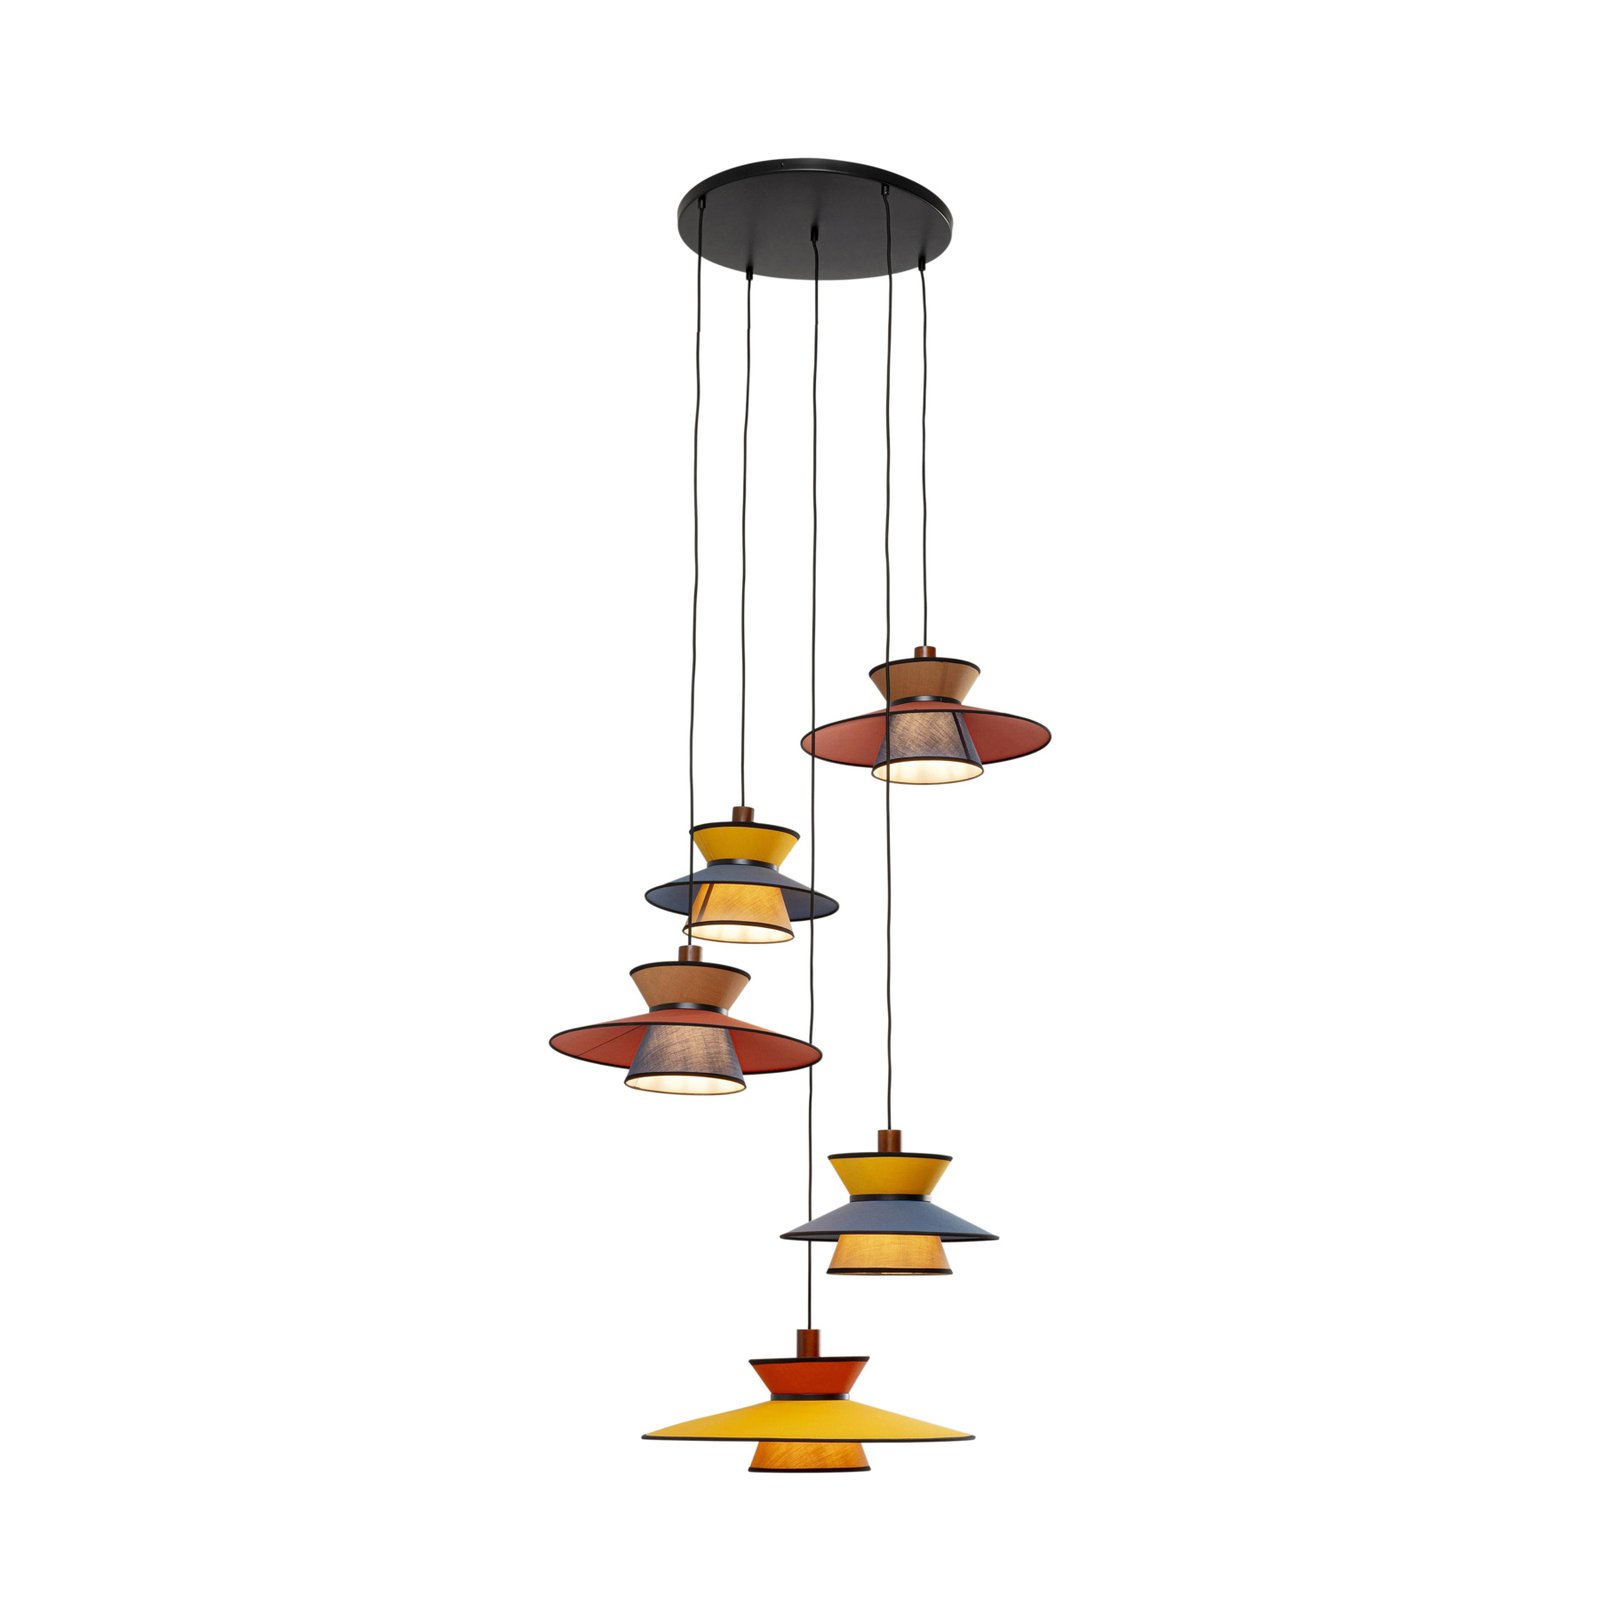 Kare lámpara colgante Riva, multicolor, textil, madera, 5 luces